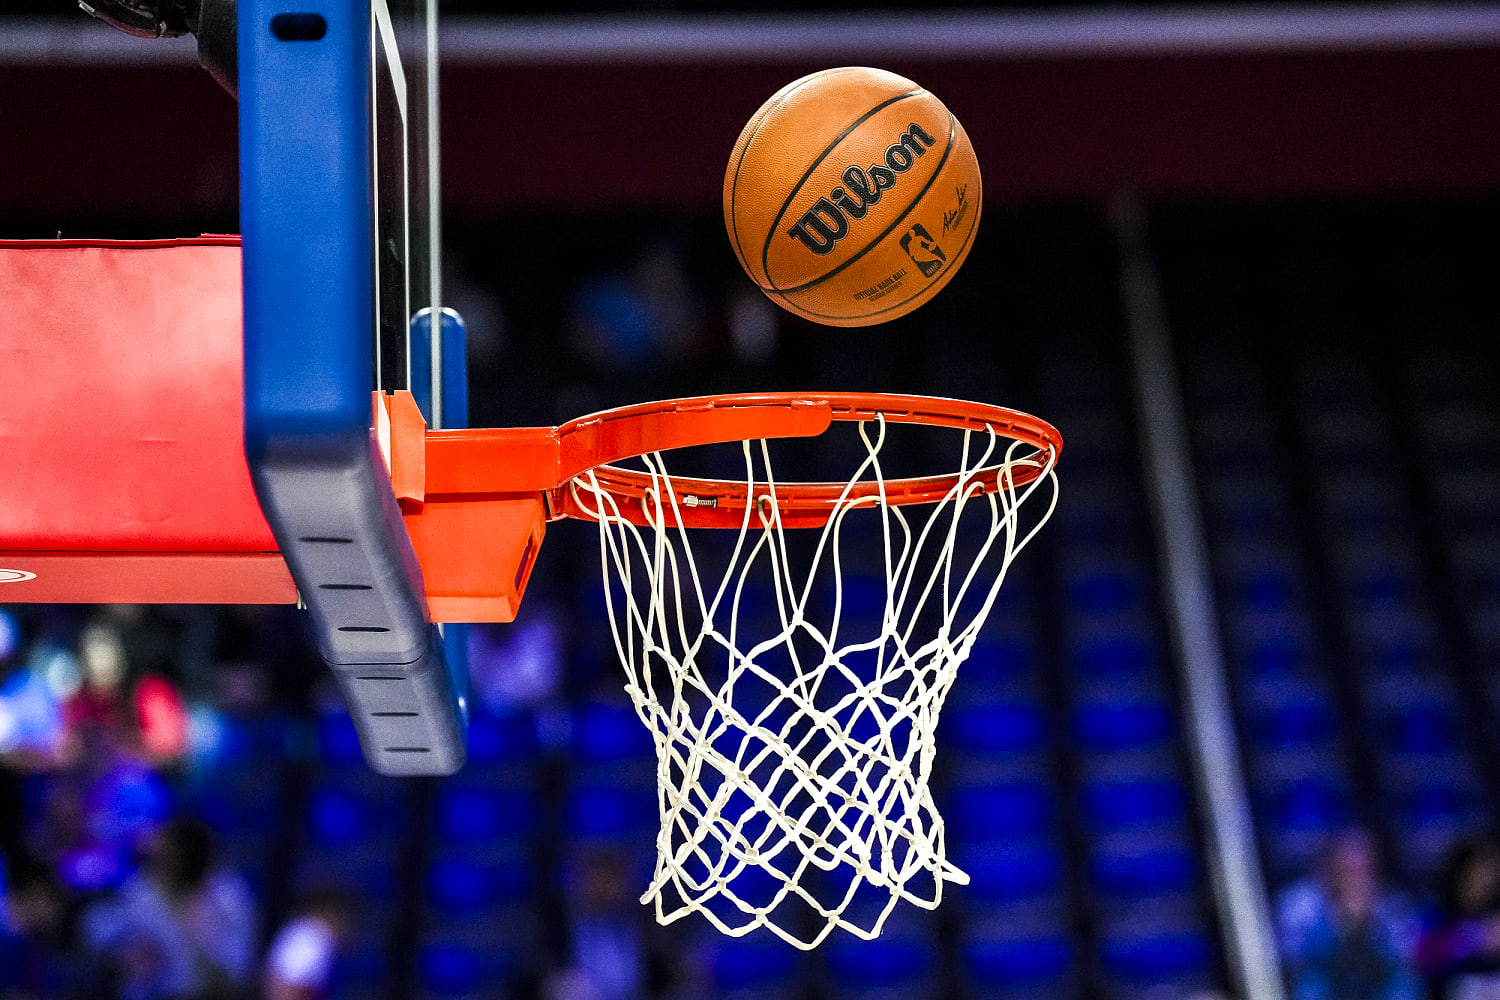 NBC Sports could buy back rights to ‘Roundball Rock’ if it airs NBA games again, composer John Tesh says